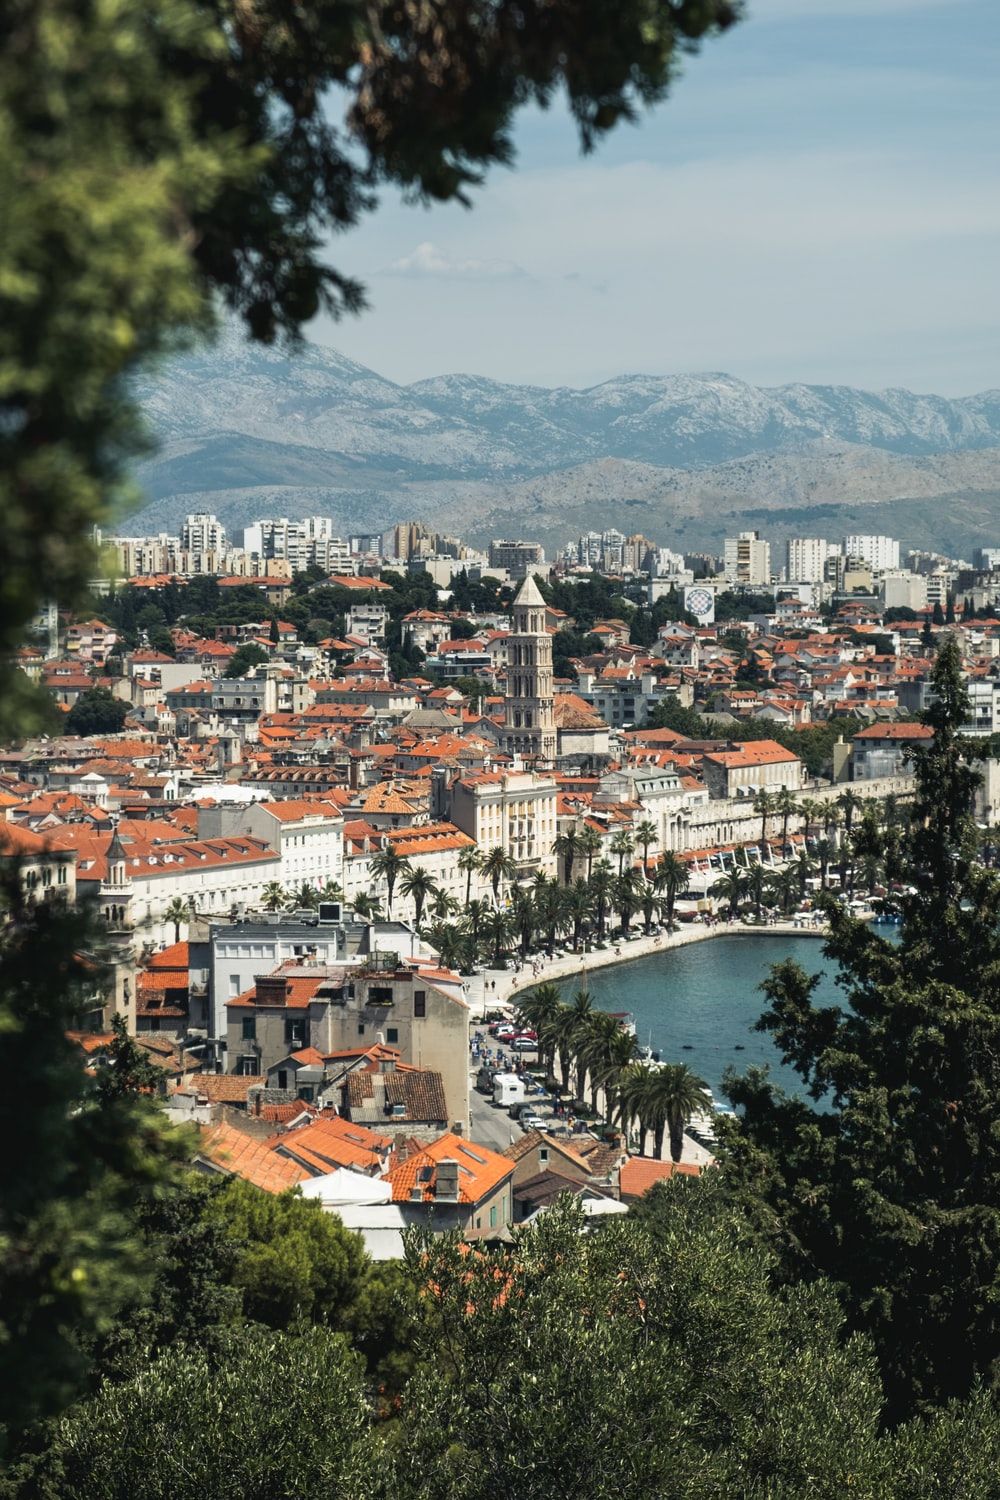 Split, Croatia Picture. Download Free Image